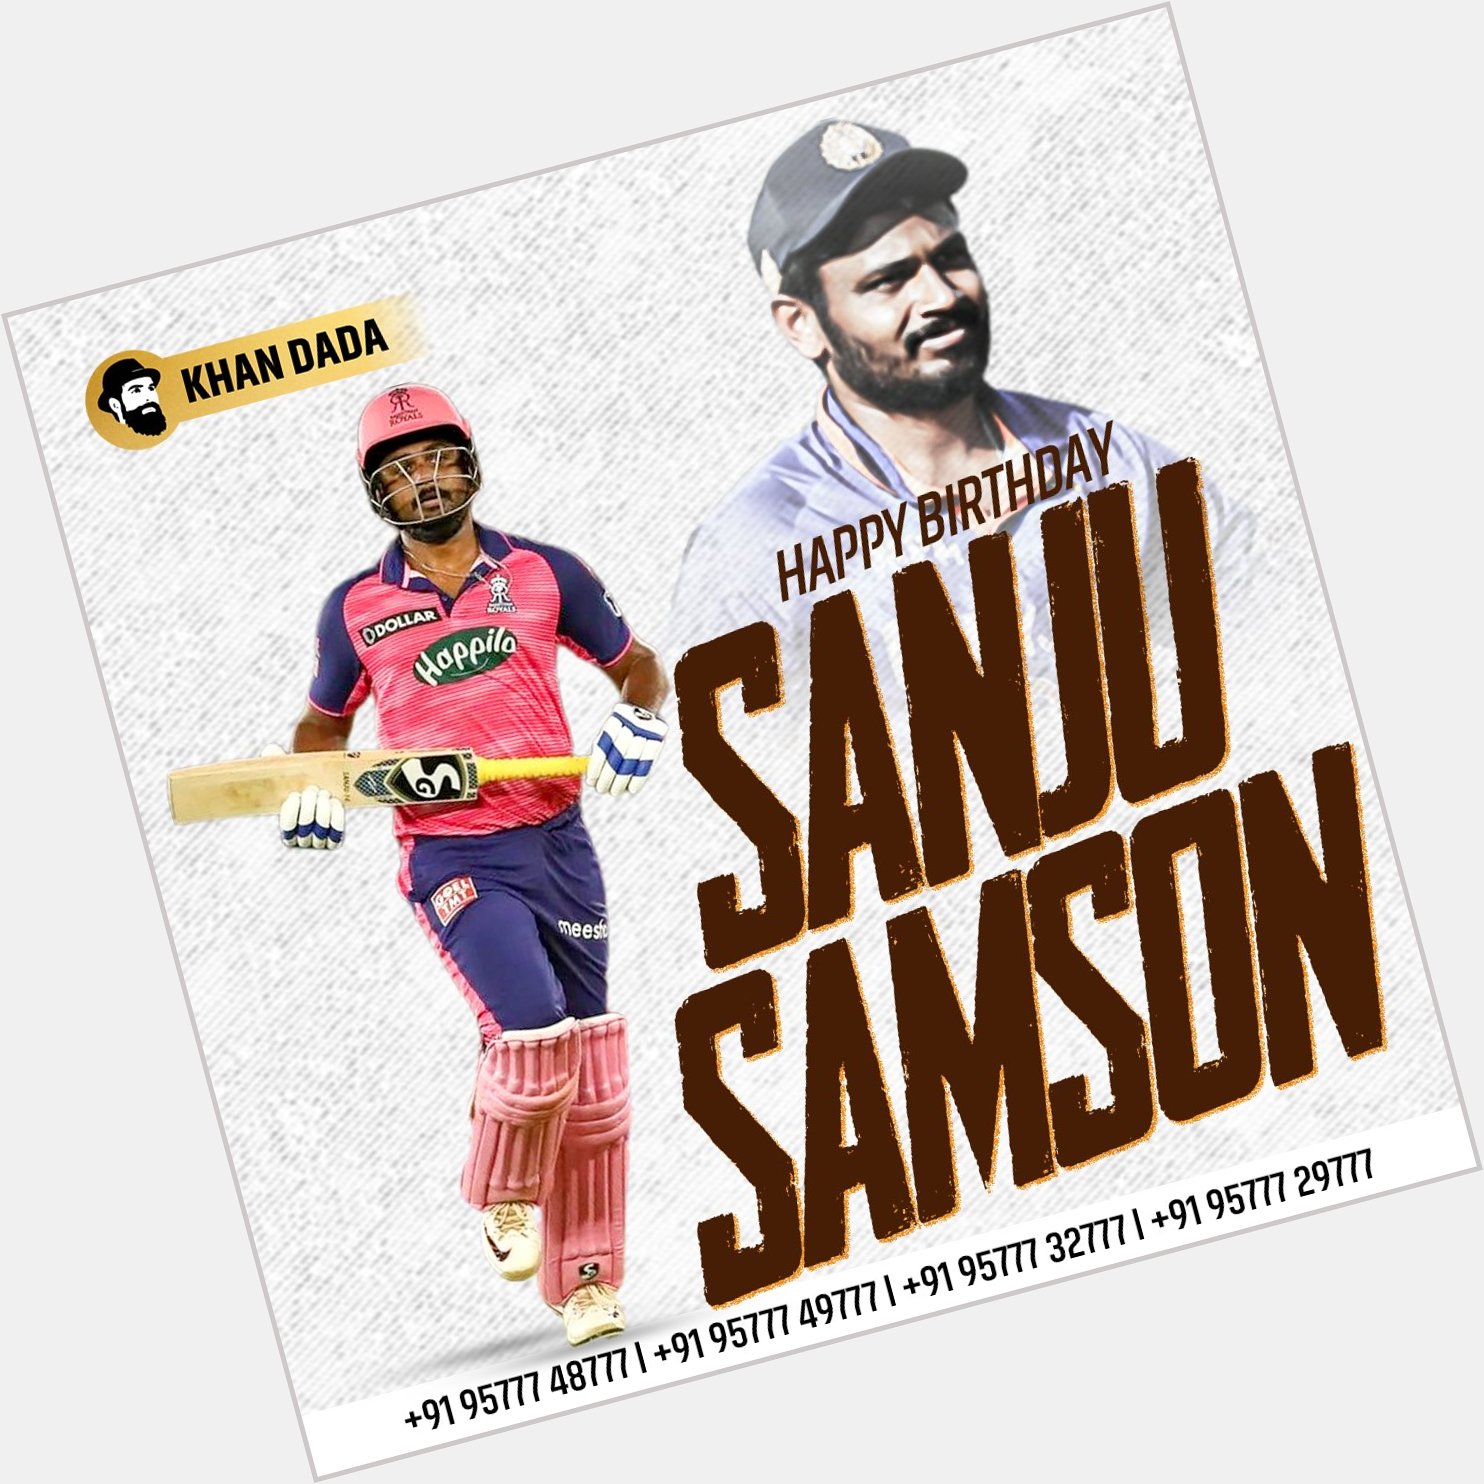 Happy Birthday Sanju Samson        